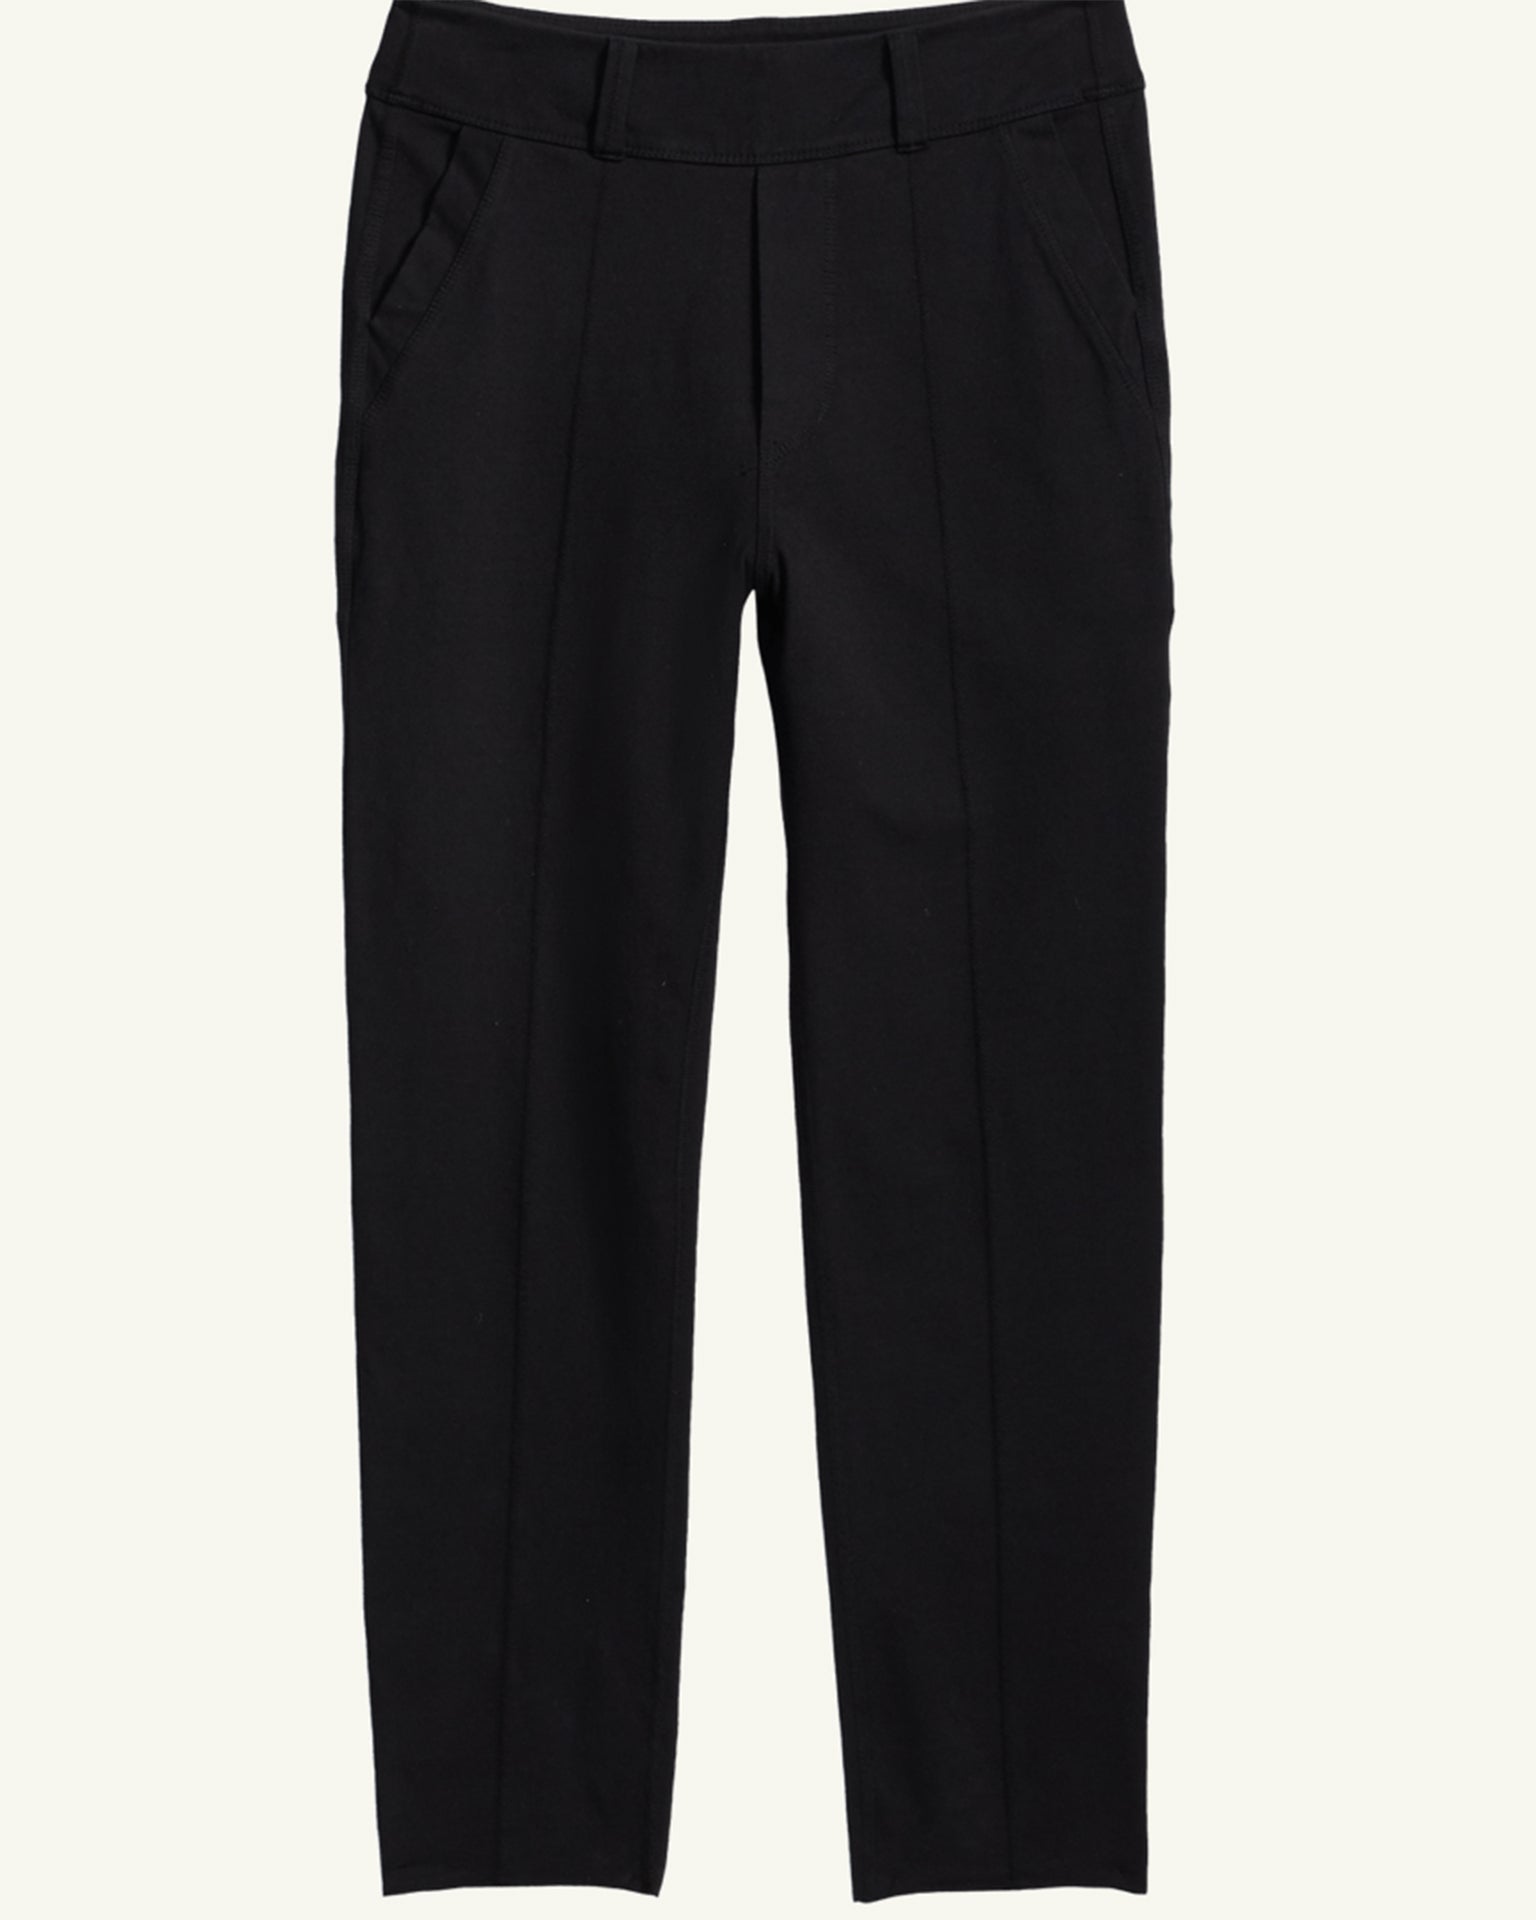 Buy MYEDO Women's Pocket Elastic Leggings Casual Pleated Trousers Pencil  Pants Trousers (Black, M) Black Medium at Amazon.in